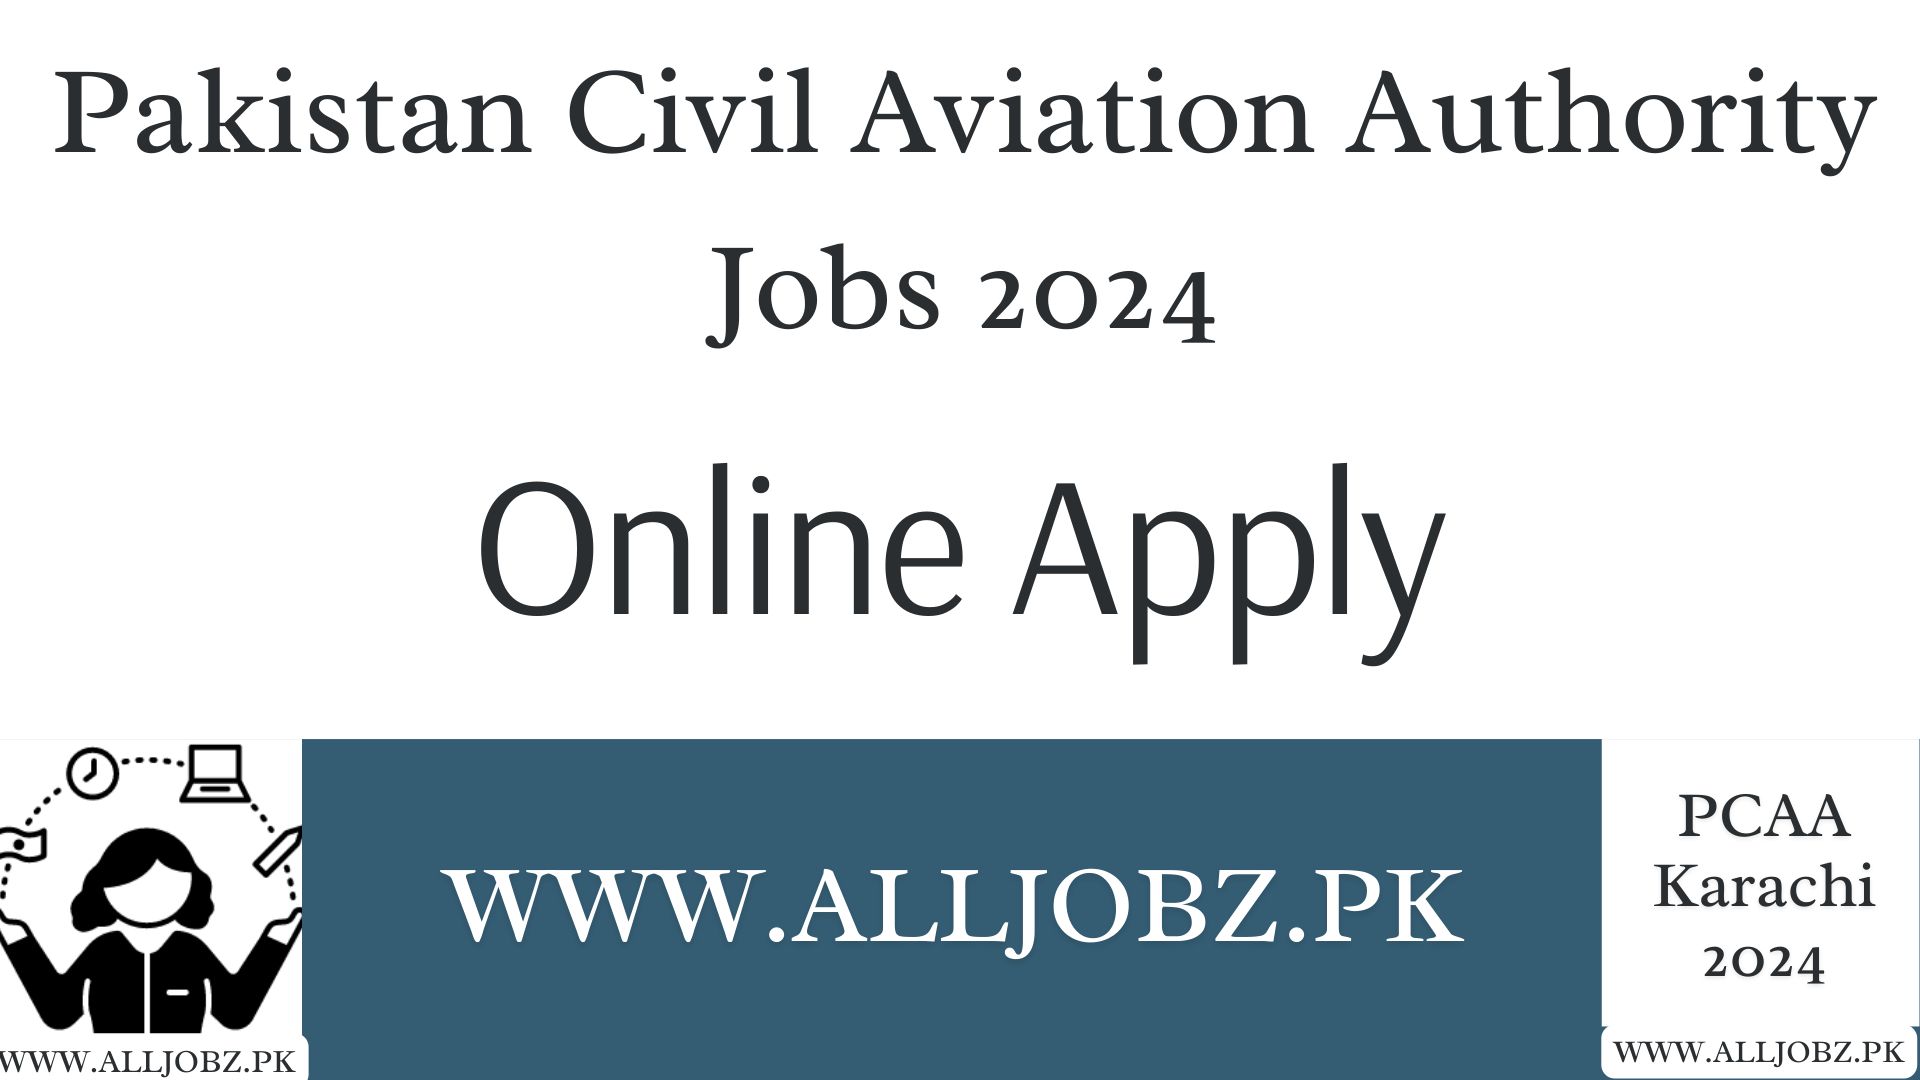 Pakistan Civil Aviation Authority Jobs Online Apply, Civil Aviation Authority Jobs Online Apply,